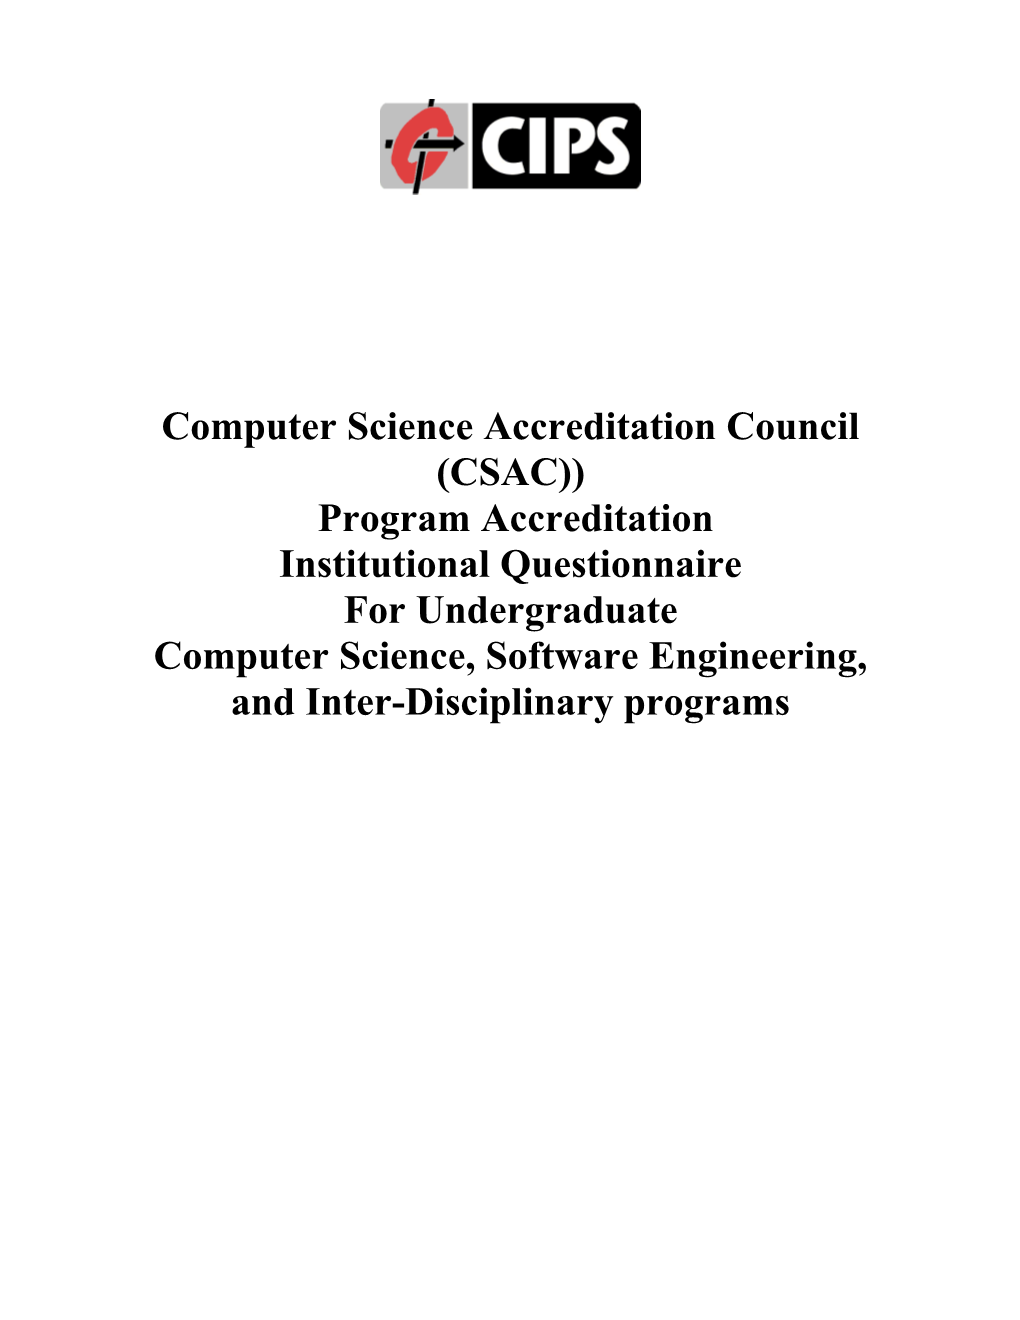 CSAC Program Accreditation